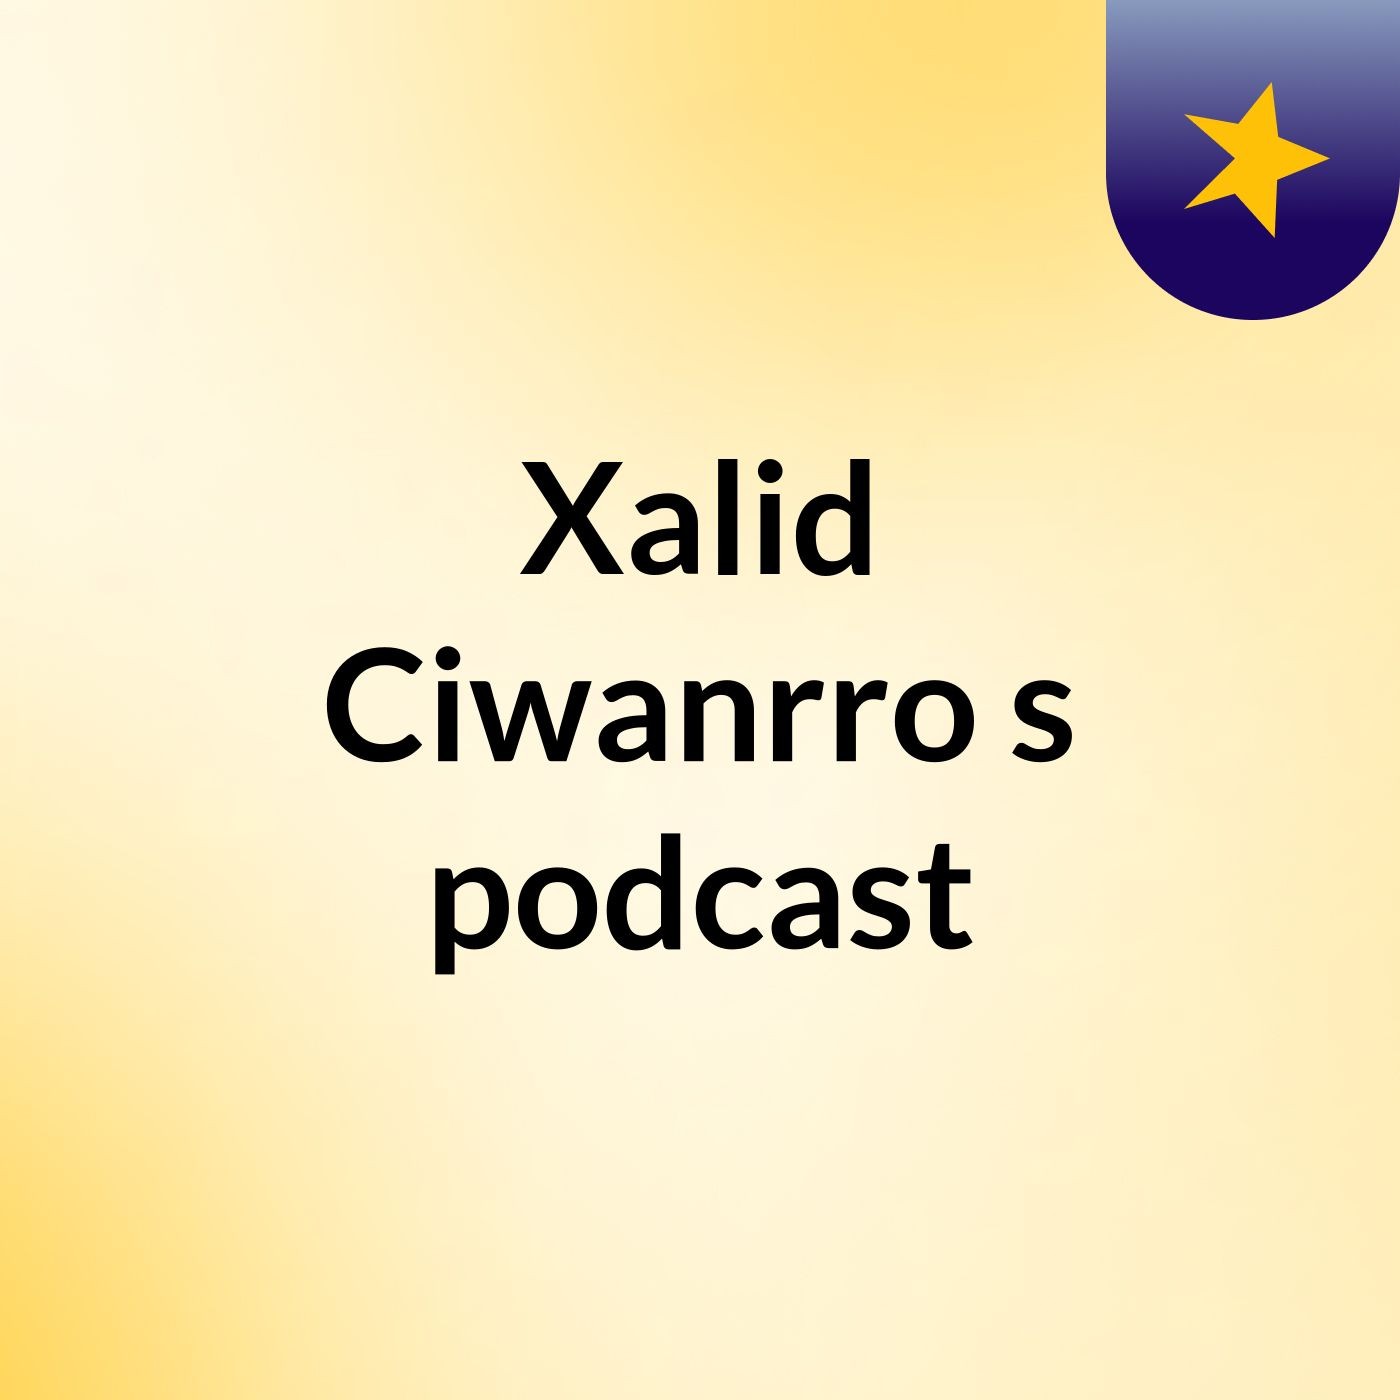 Episode 2 - Xalid Ciwanrro's podcast